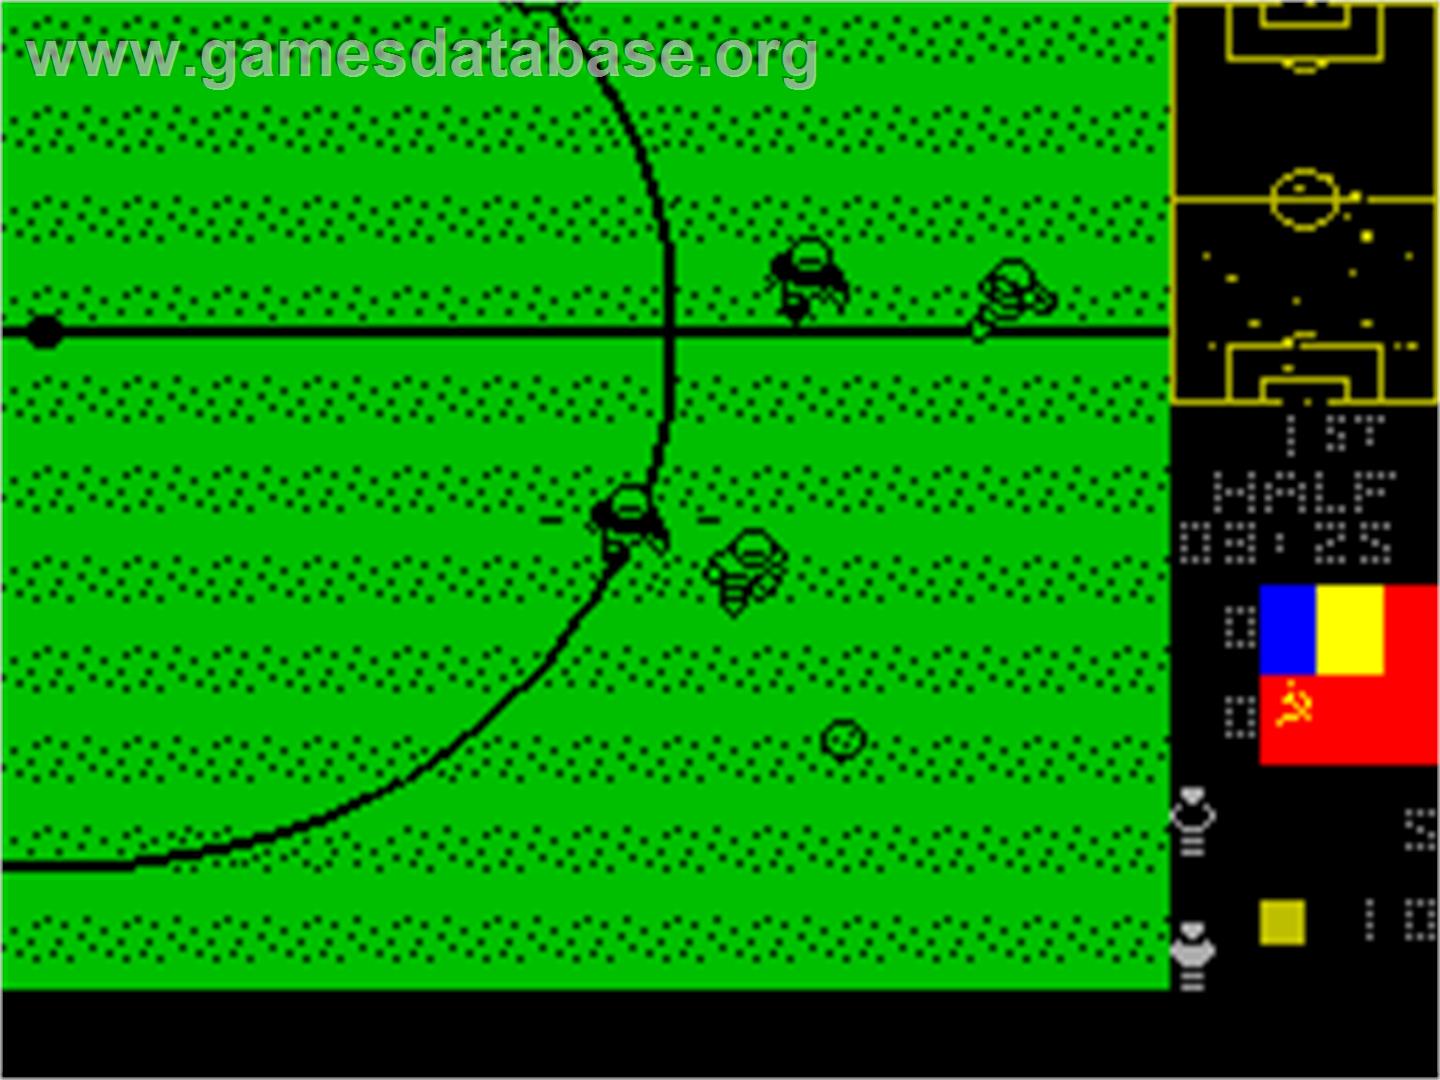 Mundial de Fútbol - Sinclair ZX Spectrum - Artwork - In Game